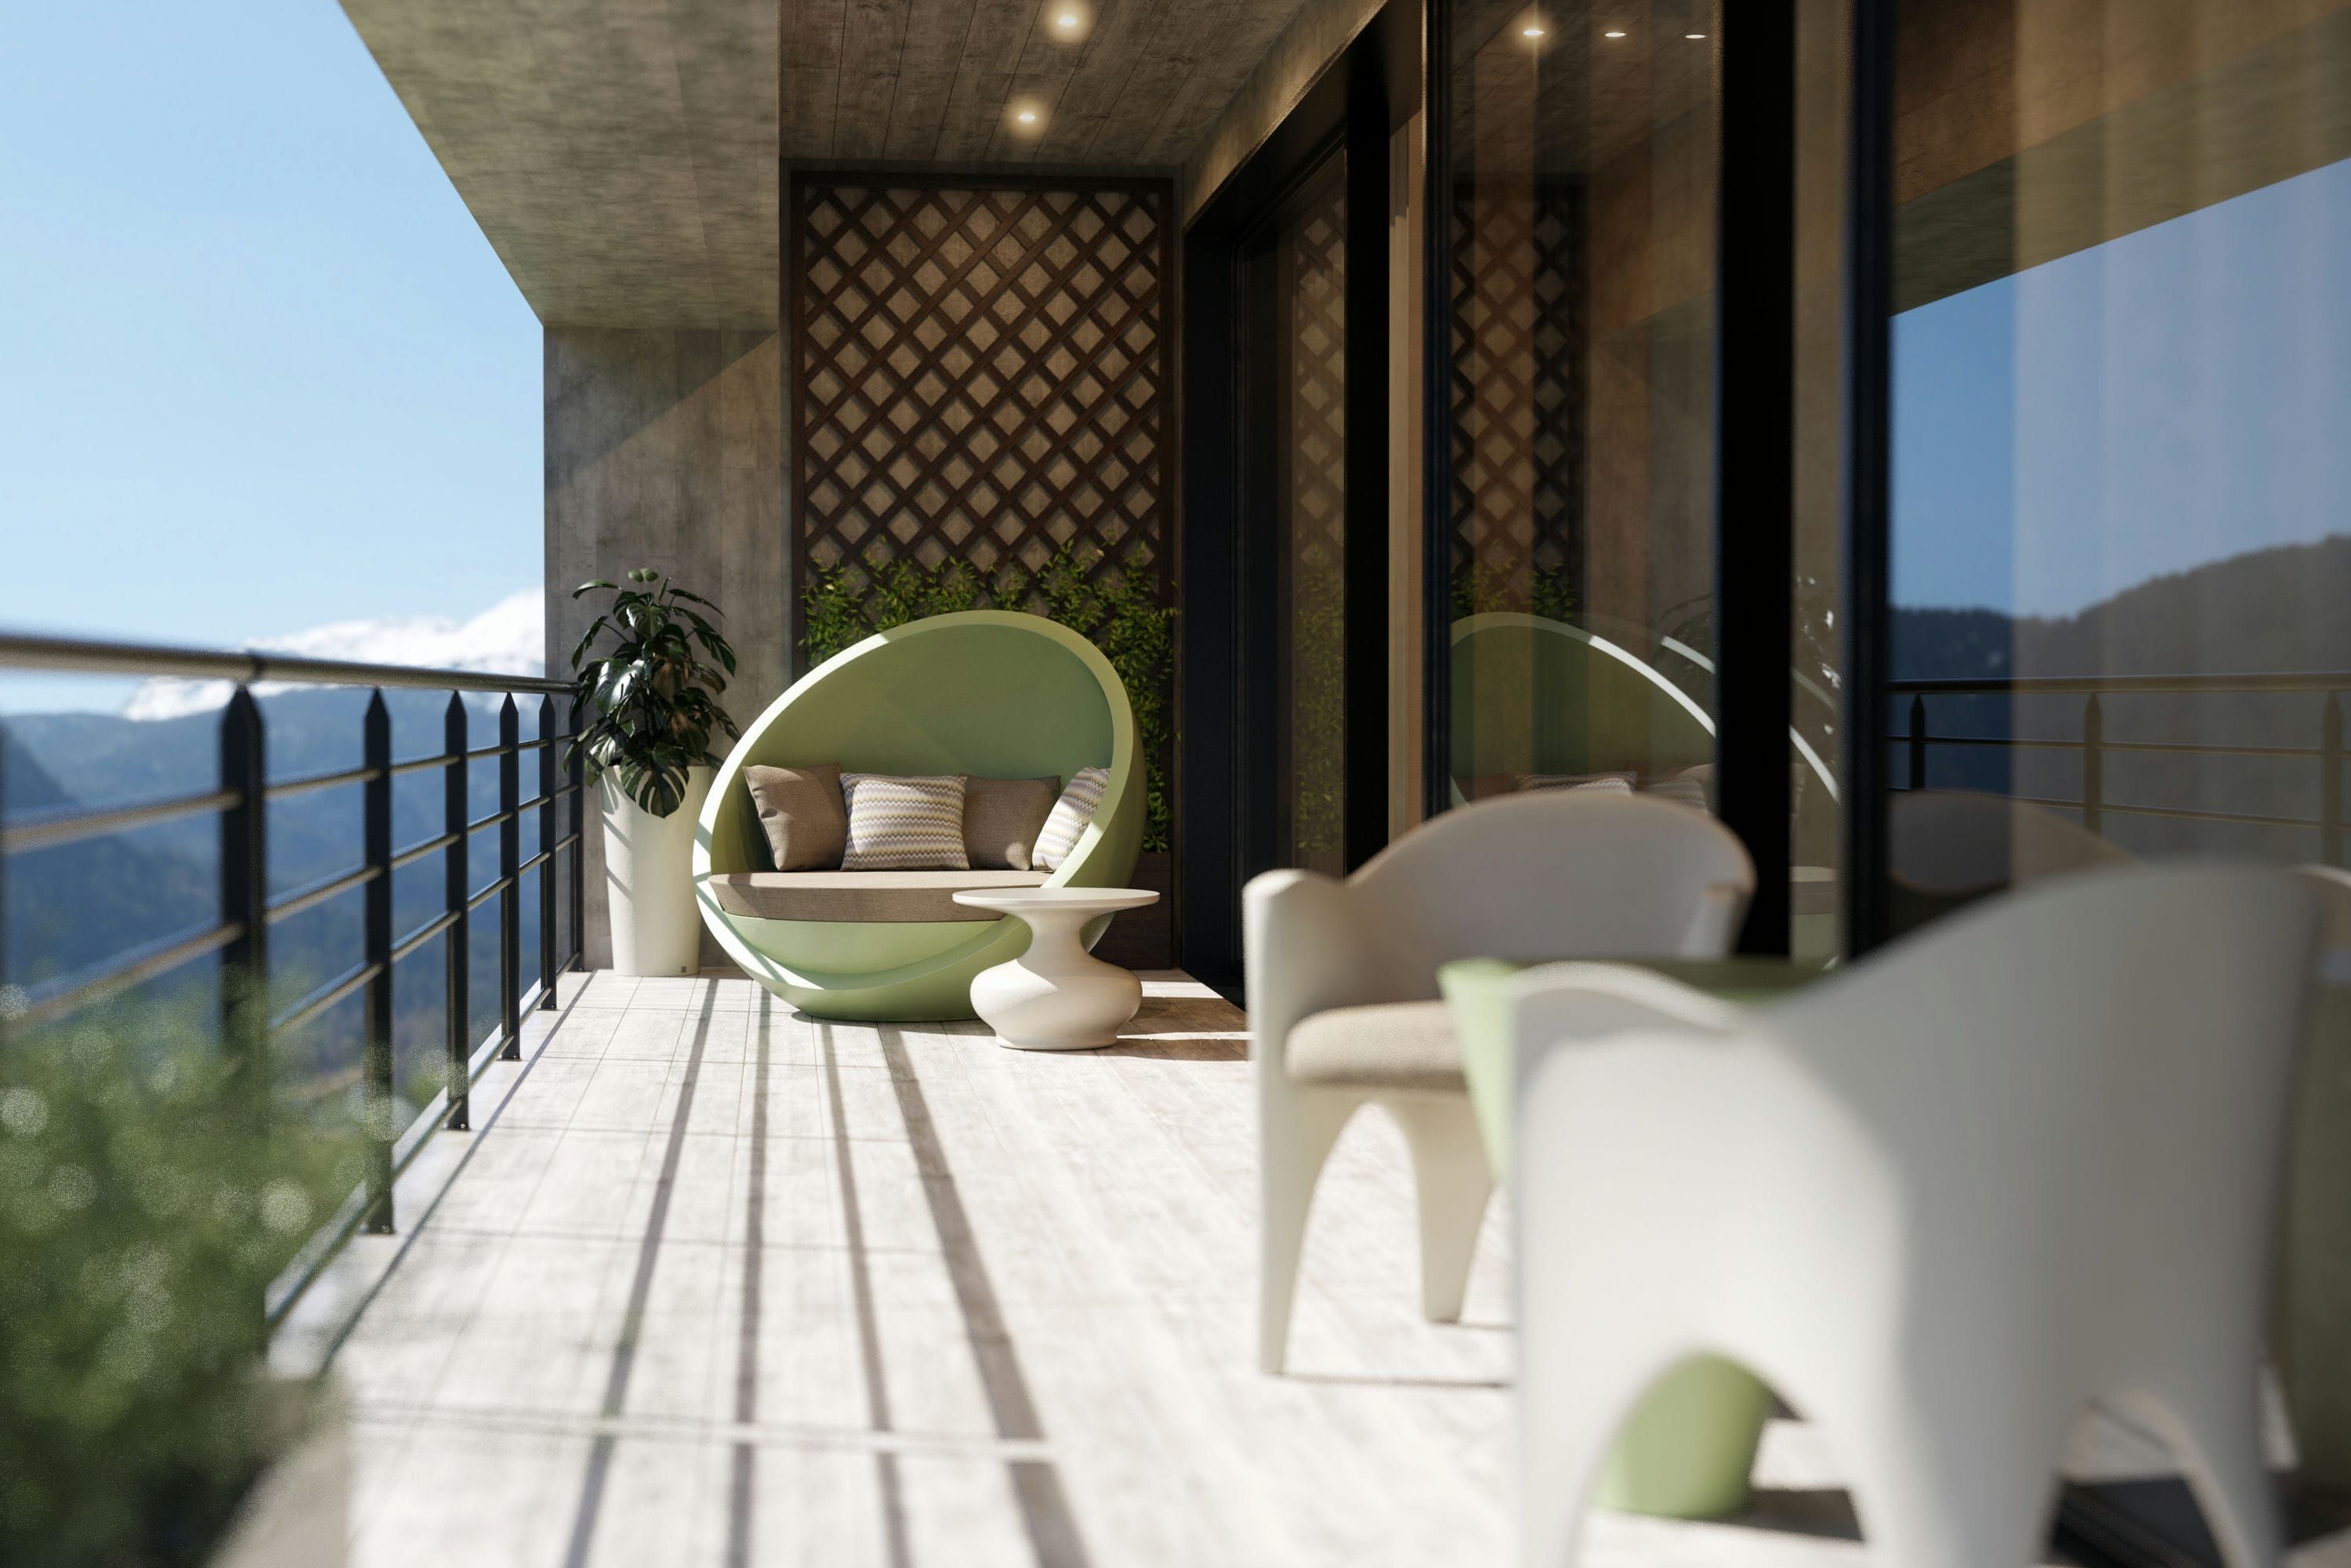 Bola sofa, Doris side table and Oceano chairs on a balcony